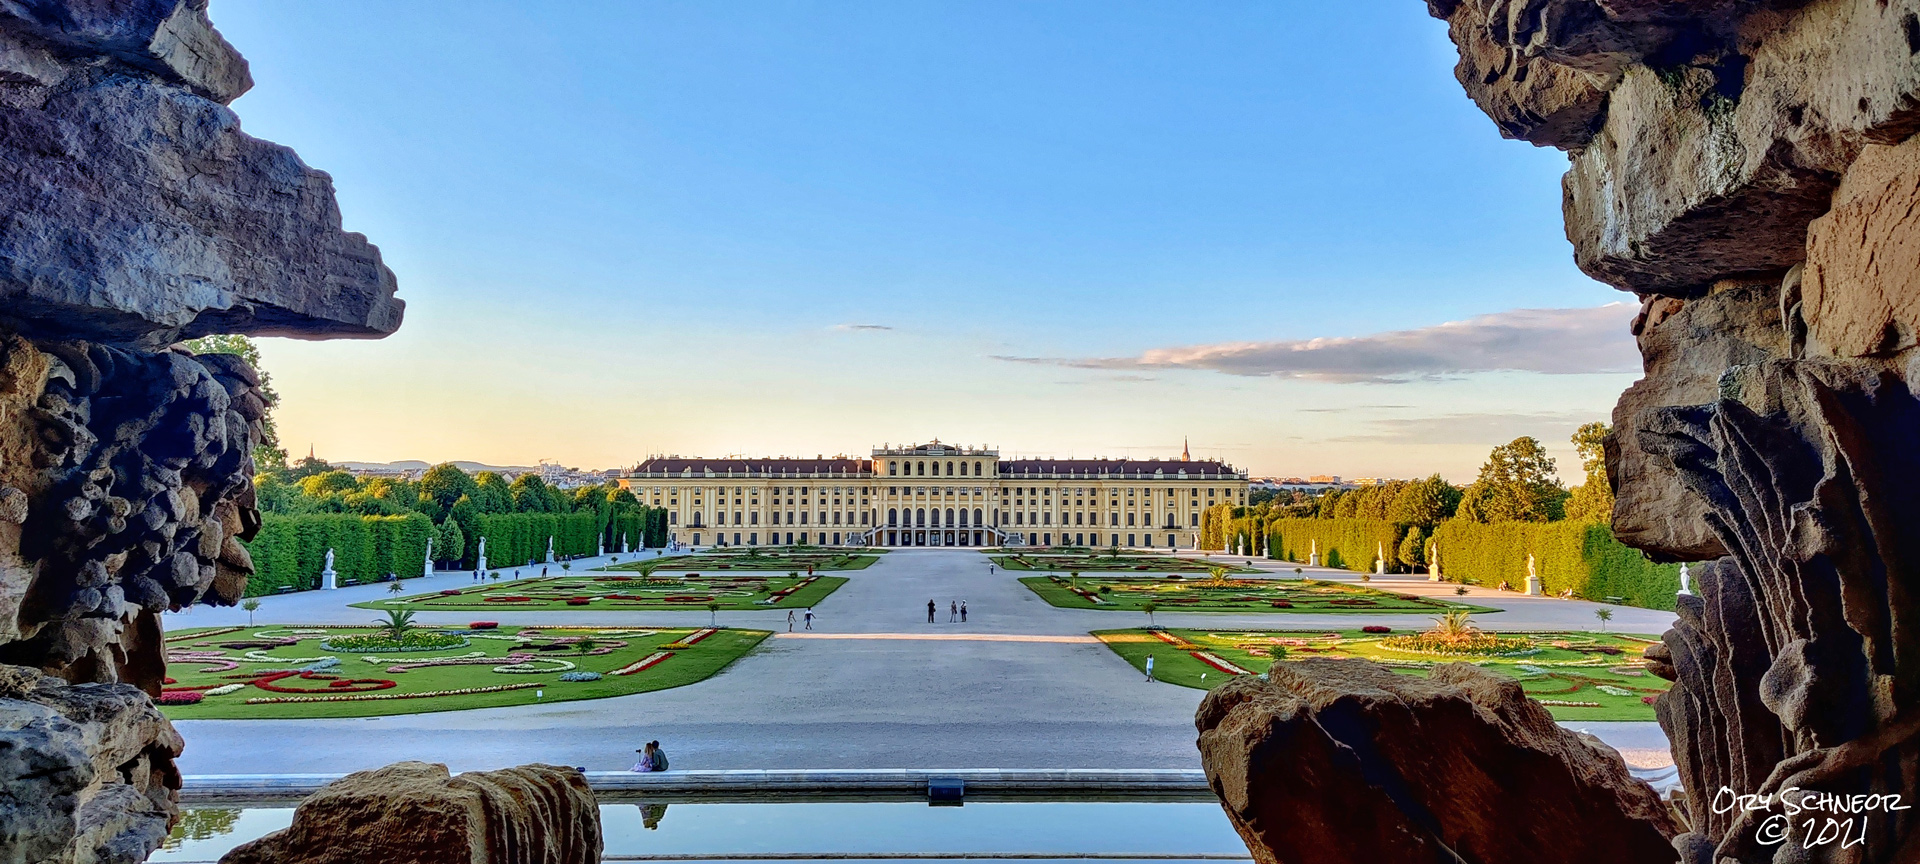 Schoenbrunn palace and gardens in Vienna